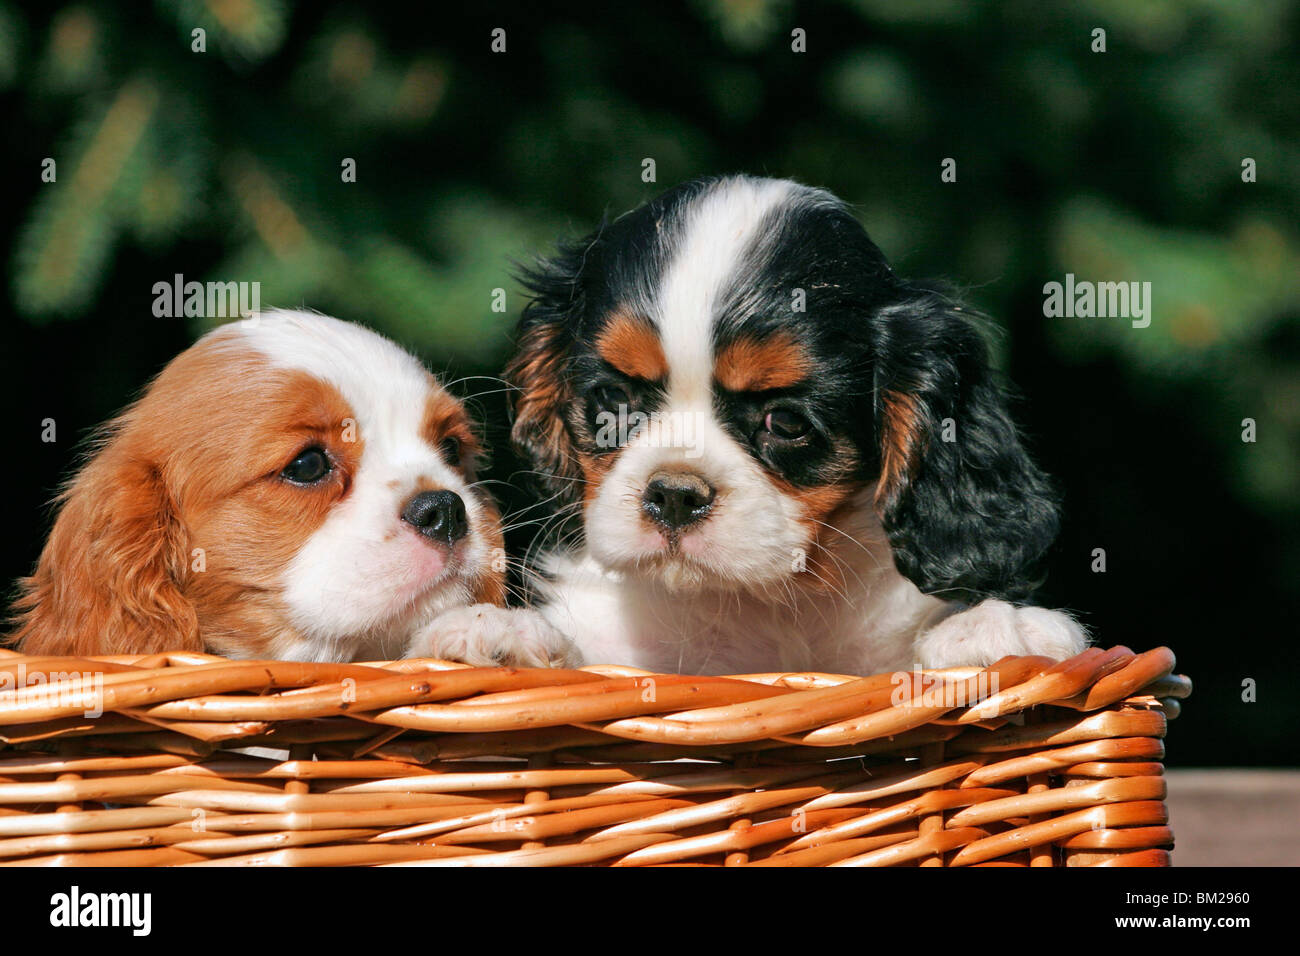 Cavalier King Charles Welpen im / CKC puppies in basket Stock Photo - Alamy